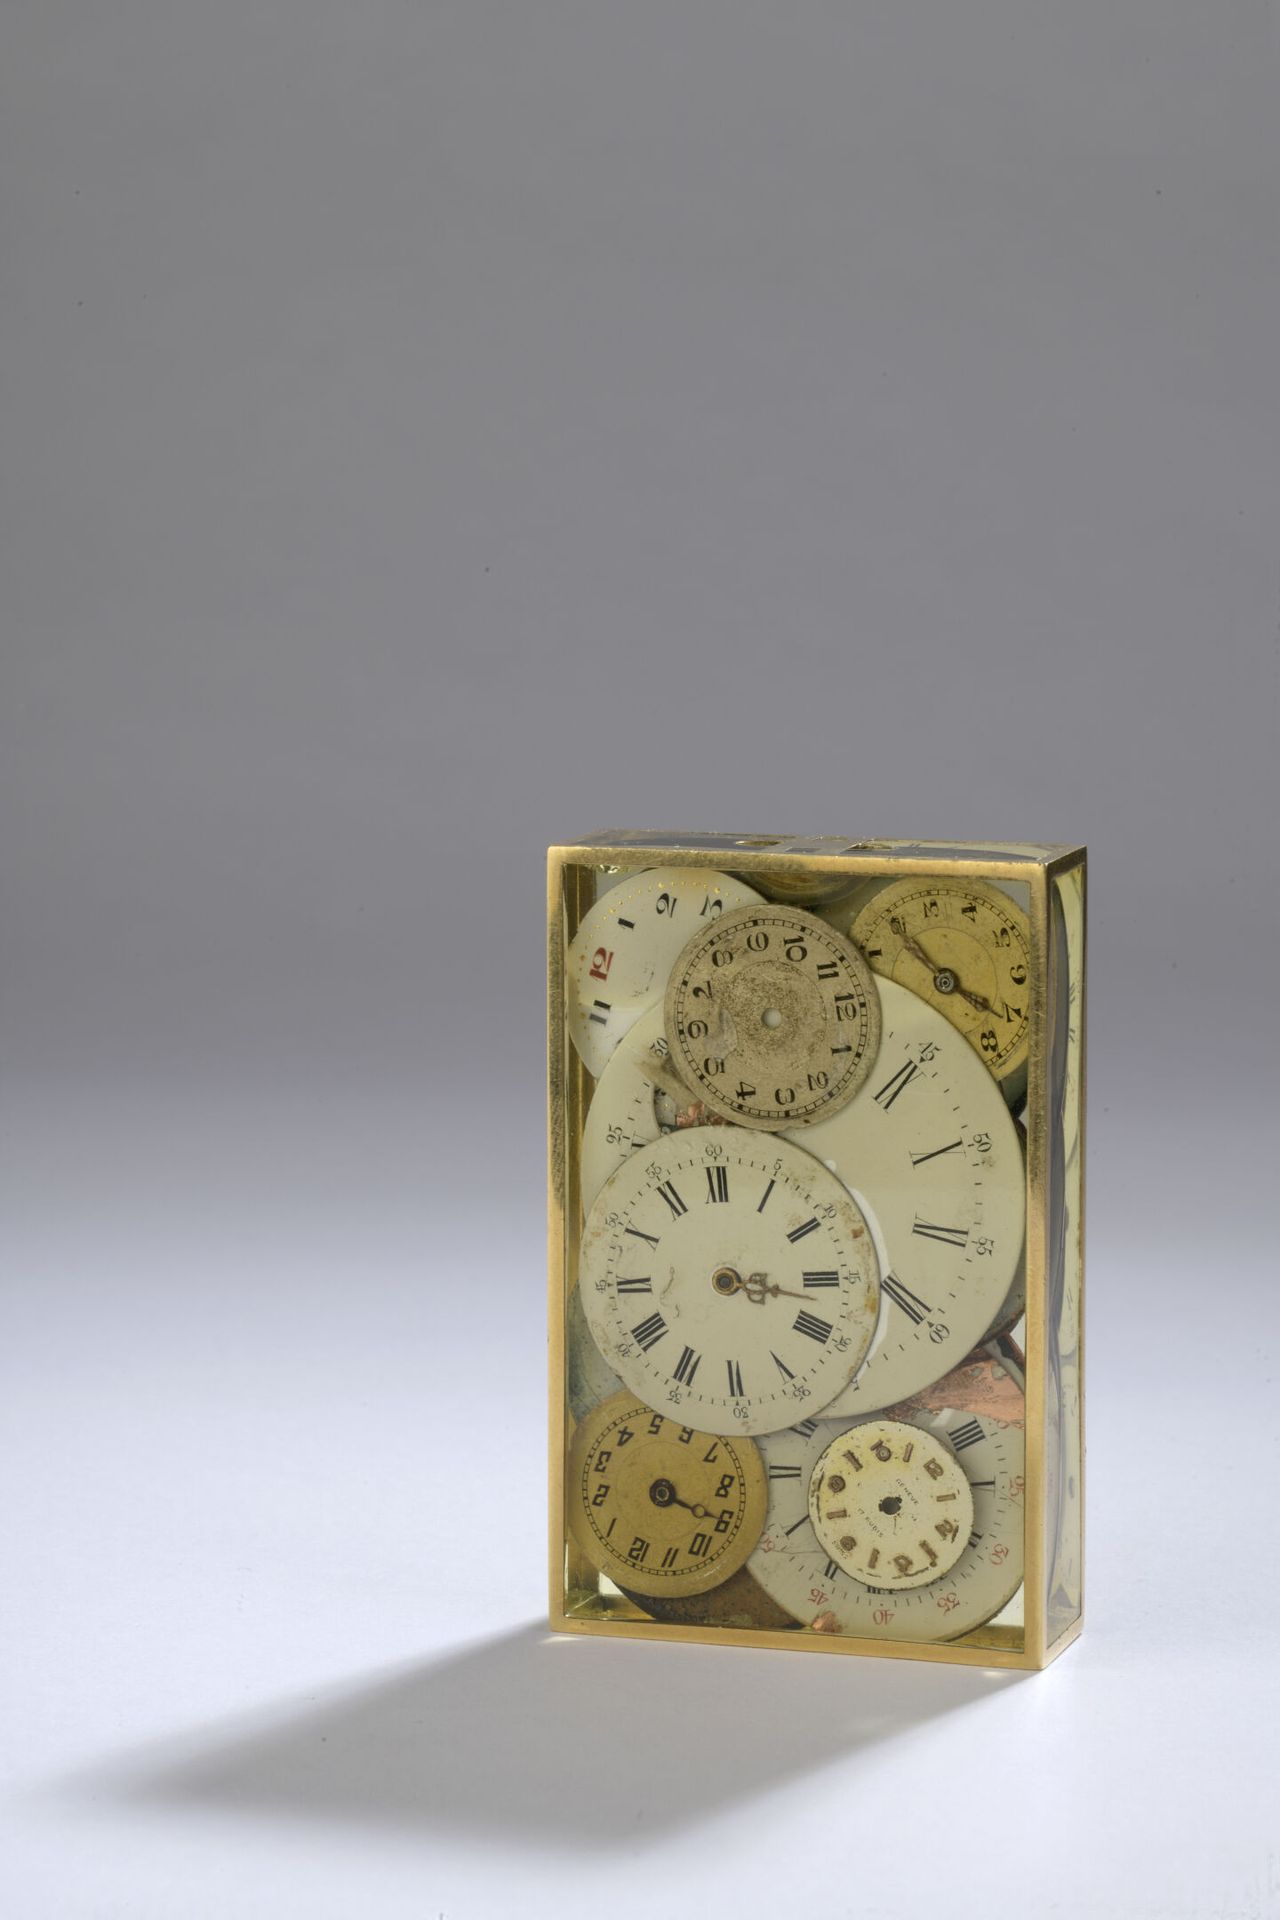 Null 阿尔曼(1928-2005)

积累/珠宝

堆积在一个镀金的黄铜盒子里的旧手表表盘，底部有签名。在顶部有一个链子的附件，可以将作品作为吊坠佩戴。

&hellip;